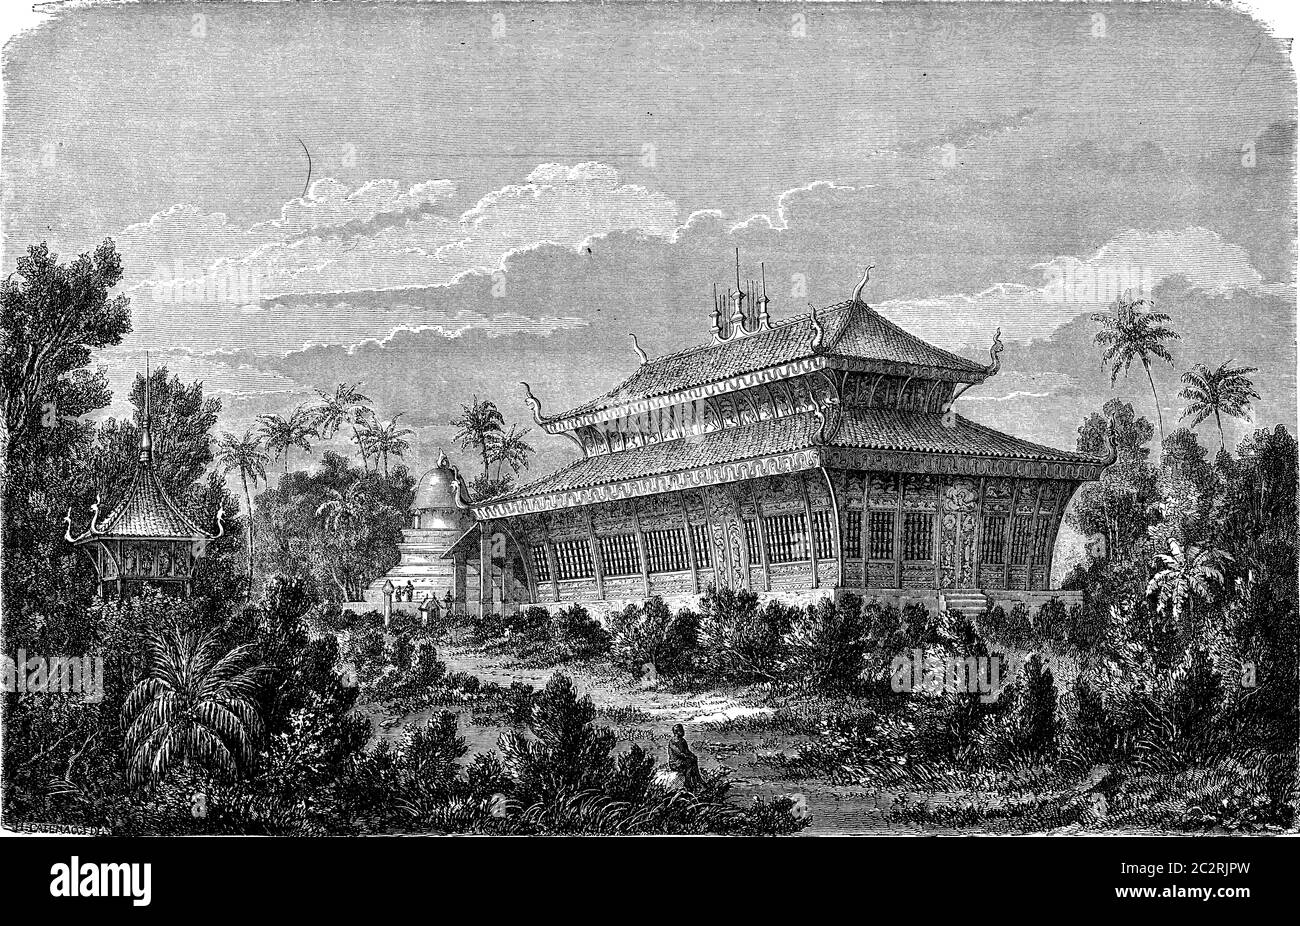 Pagoda-shaped tomb. vintage engraved illustration. Le Tour du Monde, Travel Journal, (1872). Stock Photo